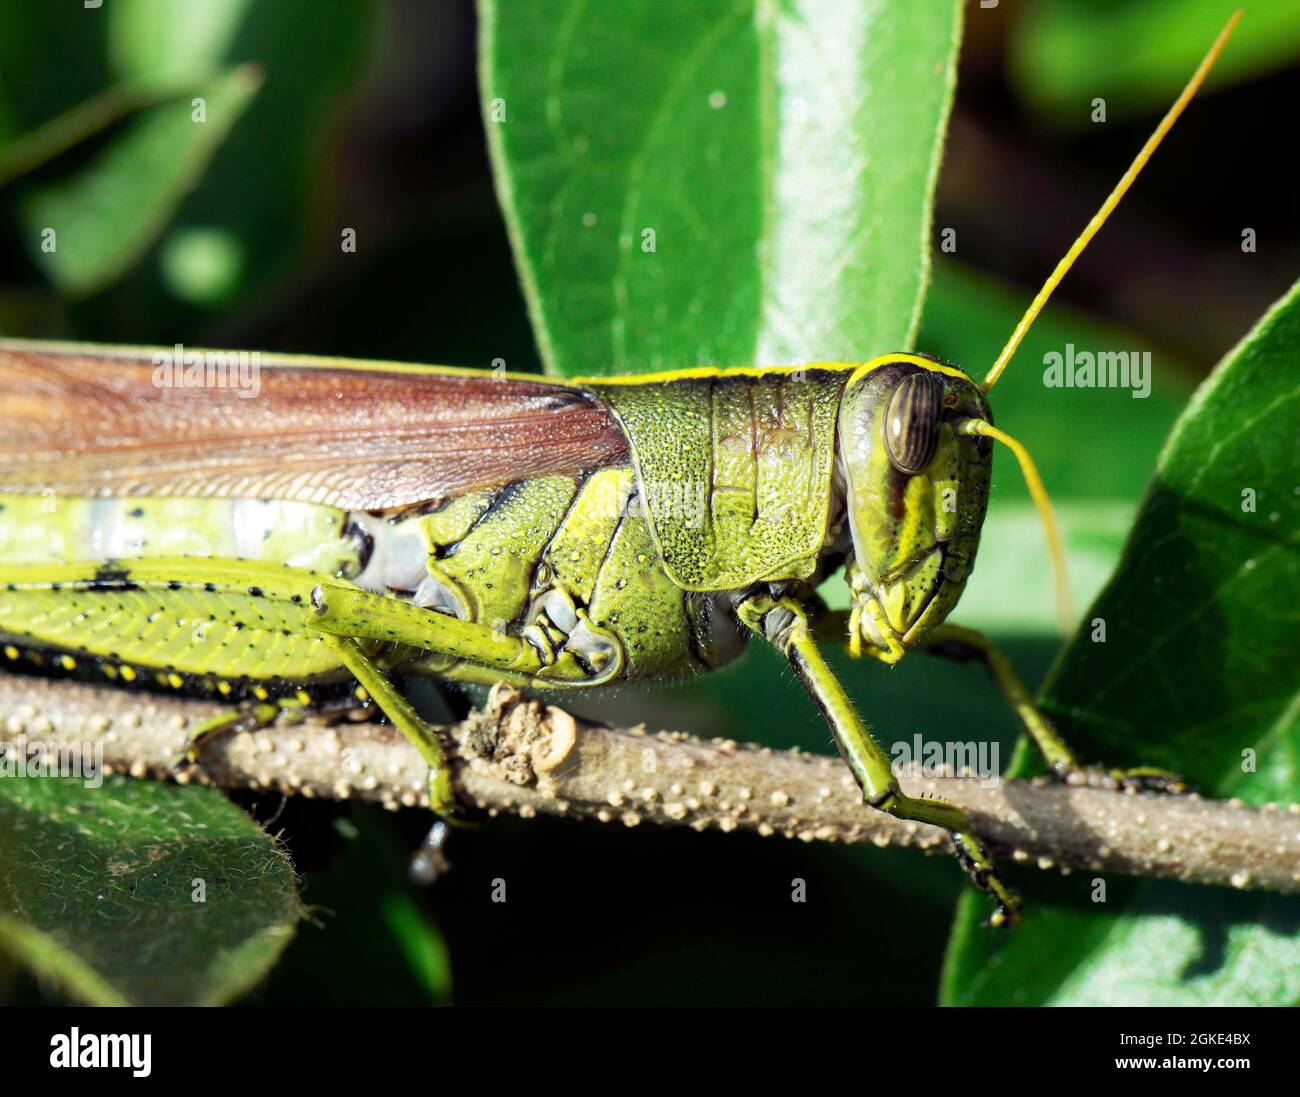 Macro Spotted Bird Grasshopper Schistocerca lineata clinging to branch Stock Photo